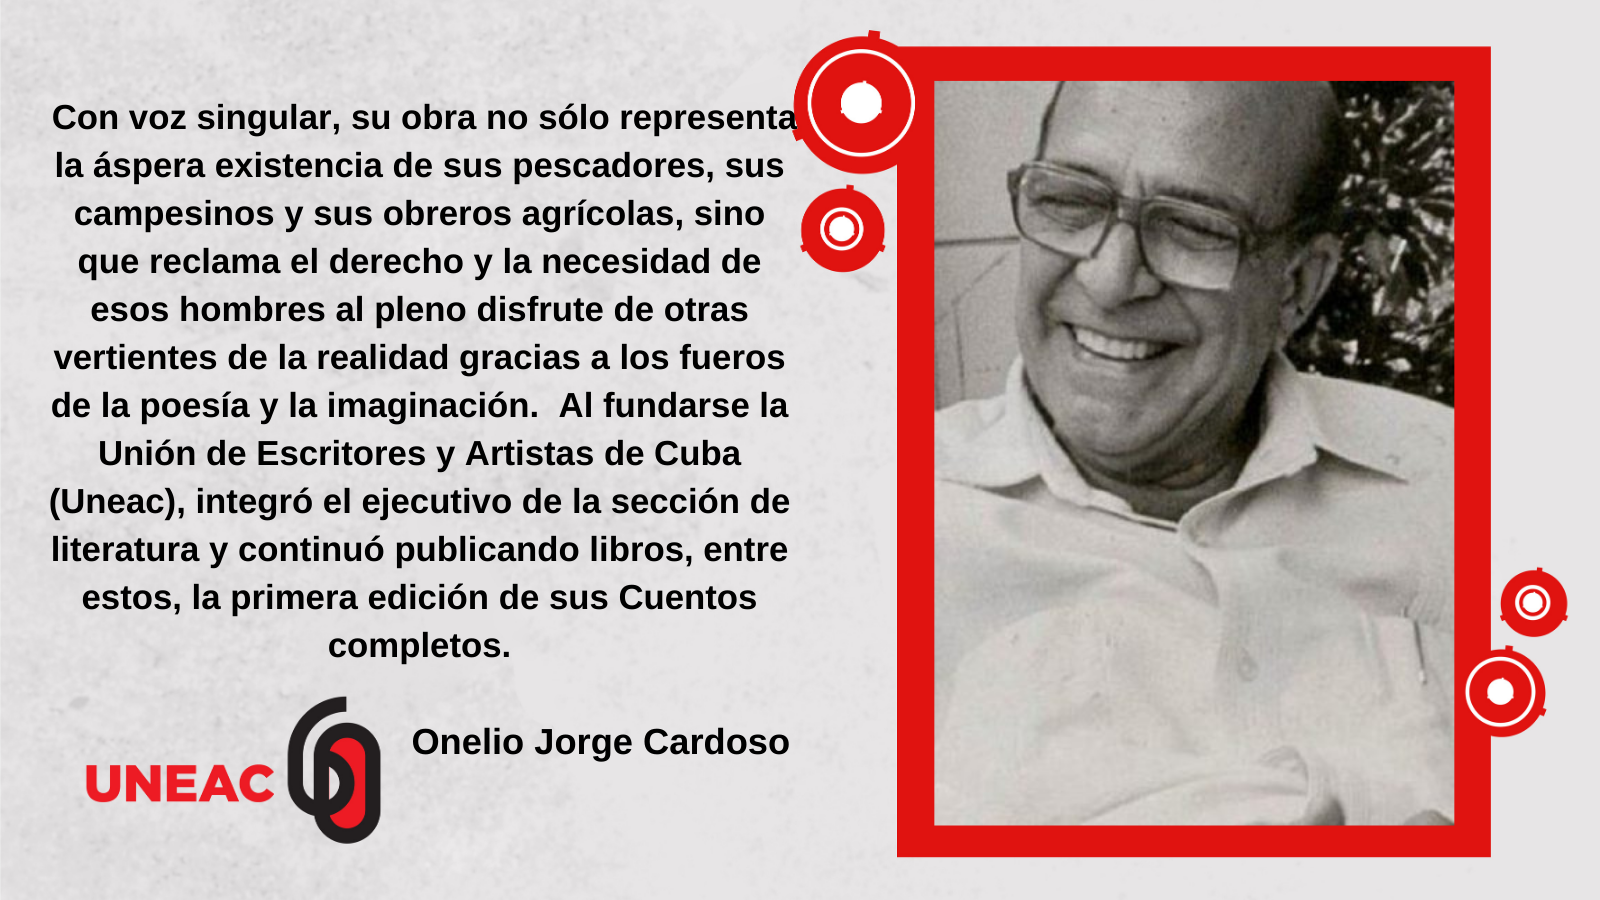 Onelio Jorge Cardoso Uneac